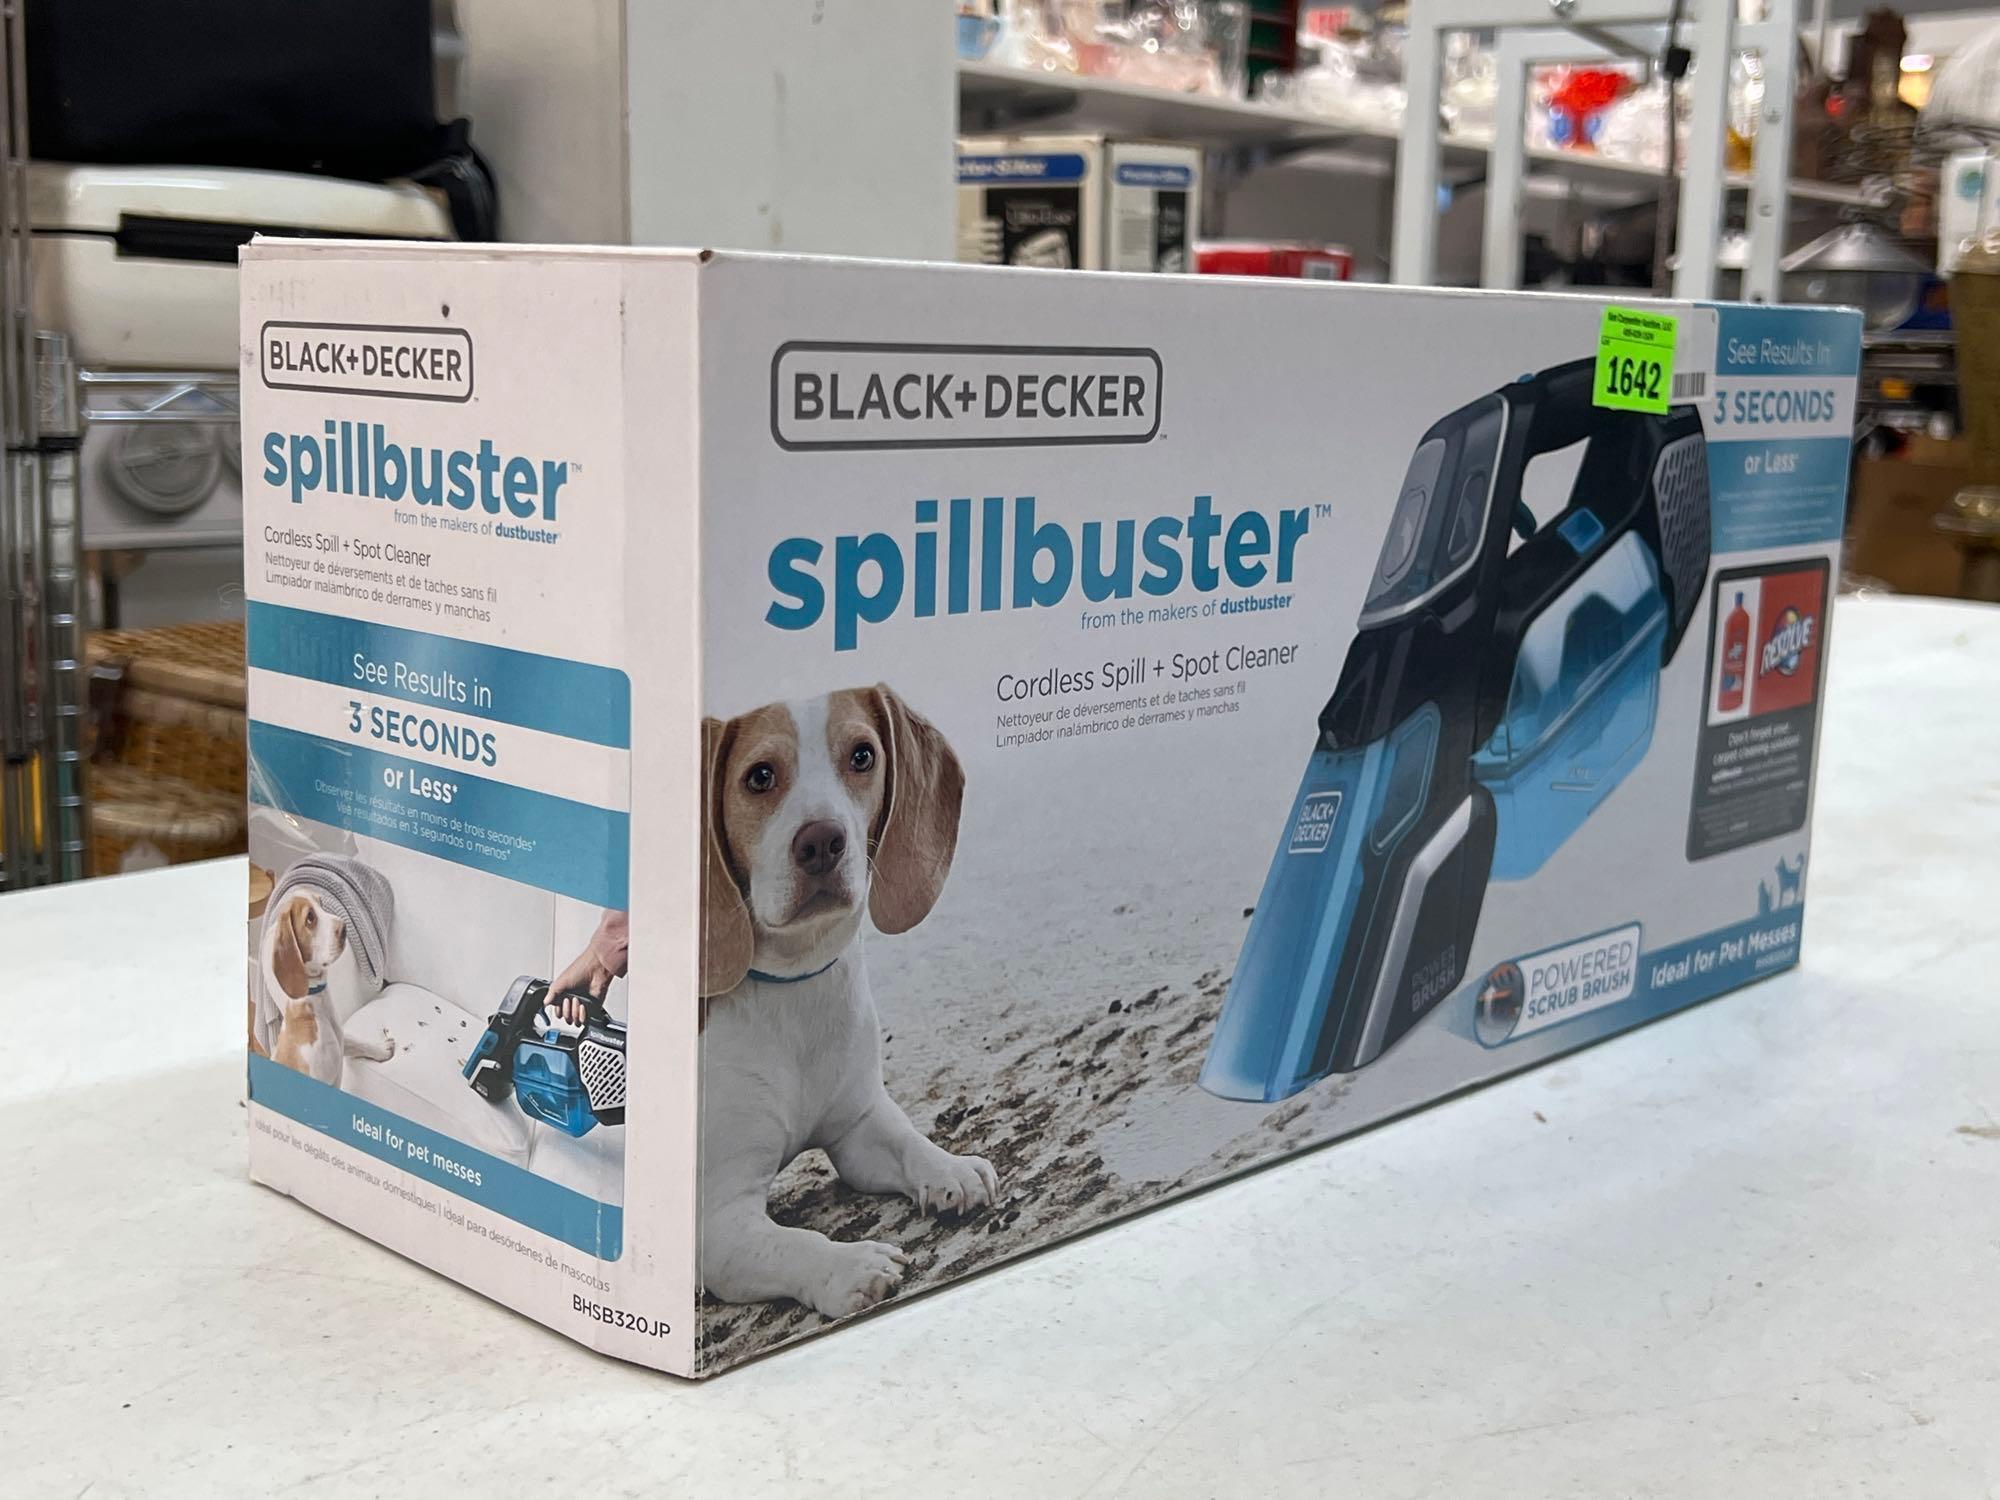 BLACK+DECKER spillbuster Cordless Spill + Spot Cleaner (BHSB320JP) review 